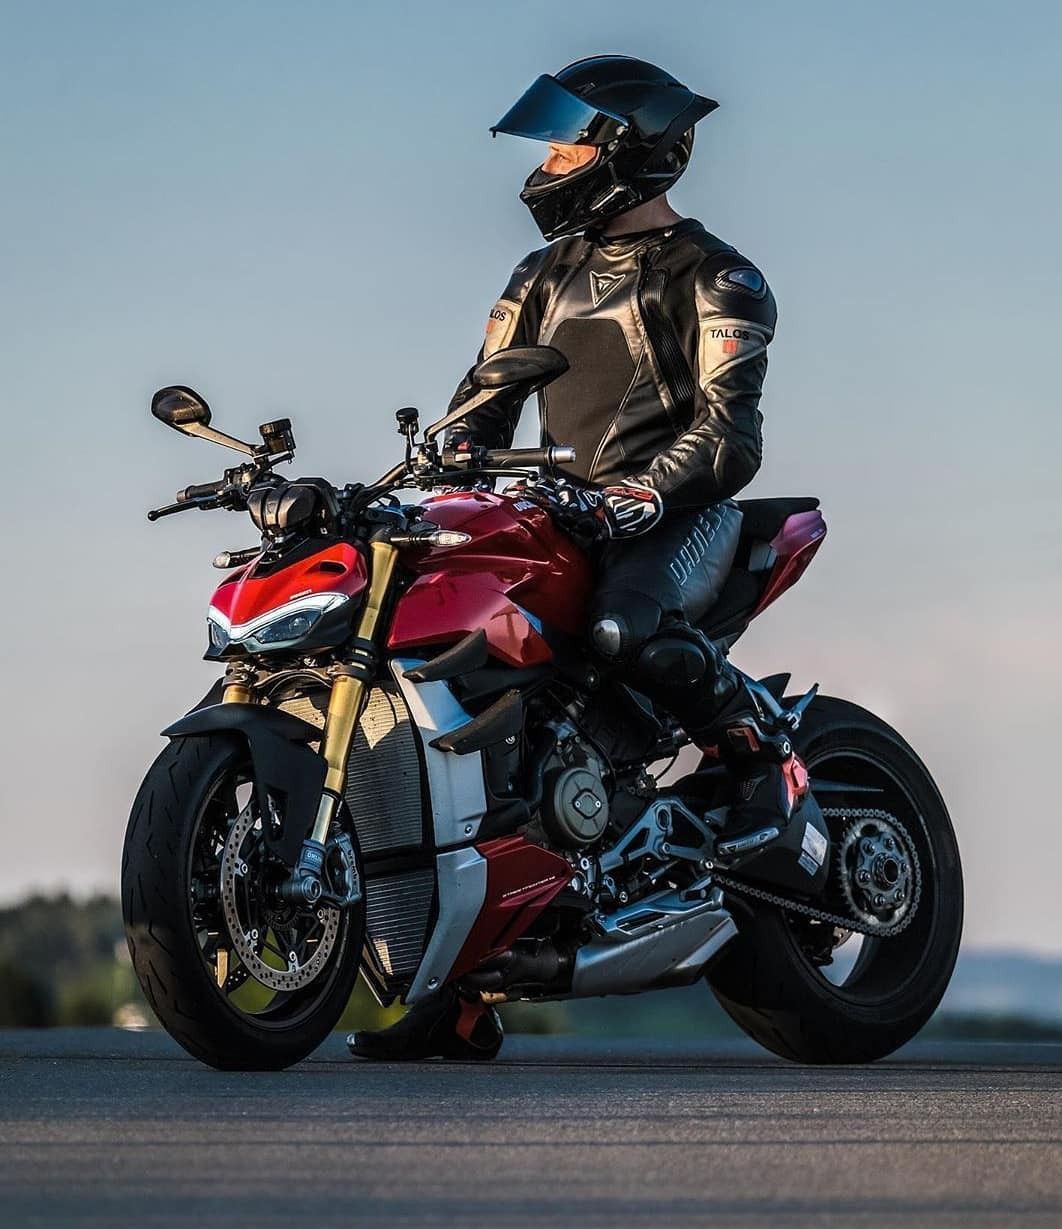 Streetfighter V4S Street fighter motorcycle Moto ducati Moto bike